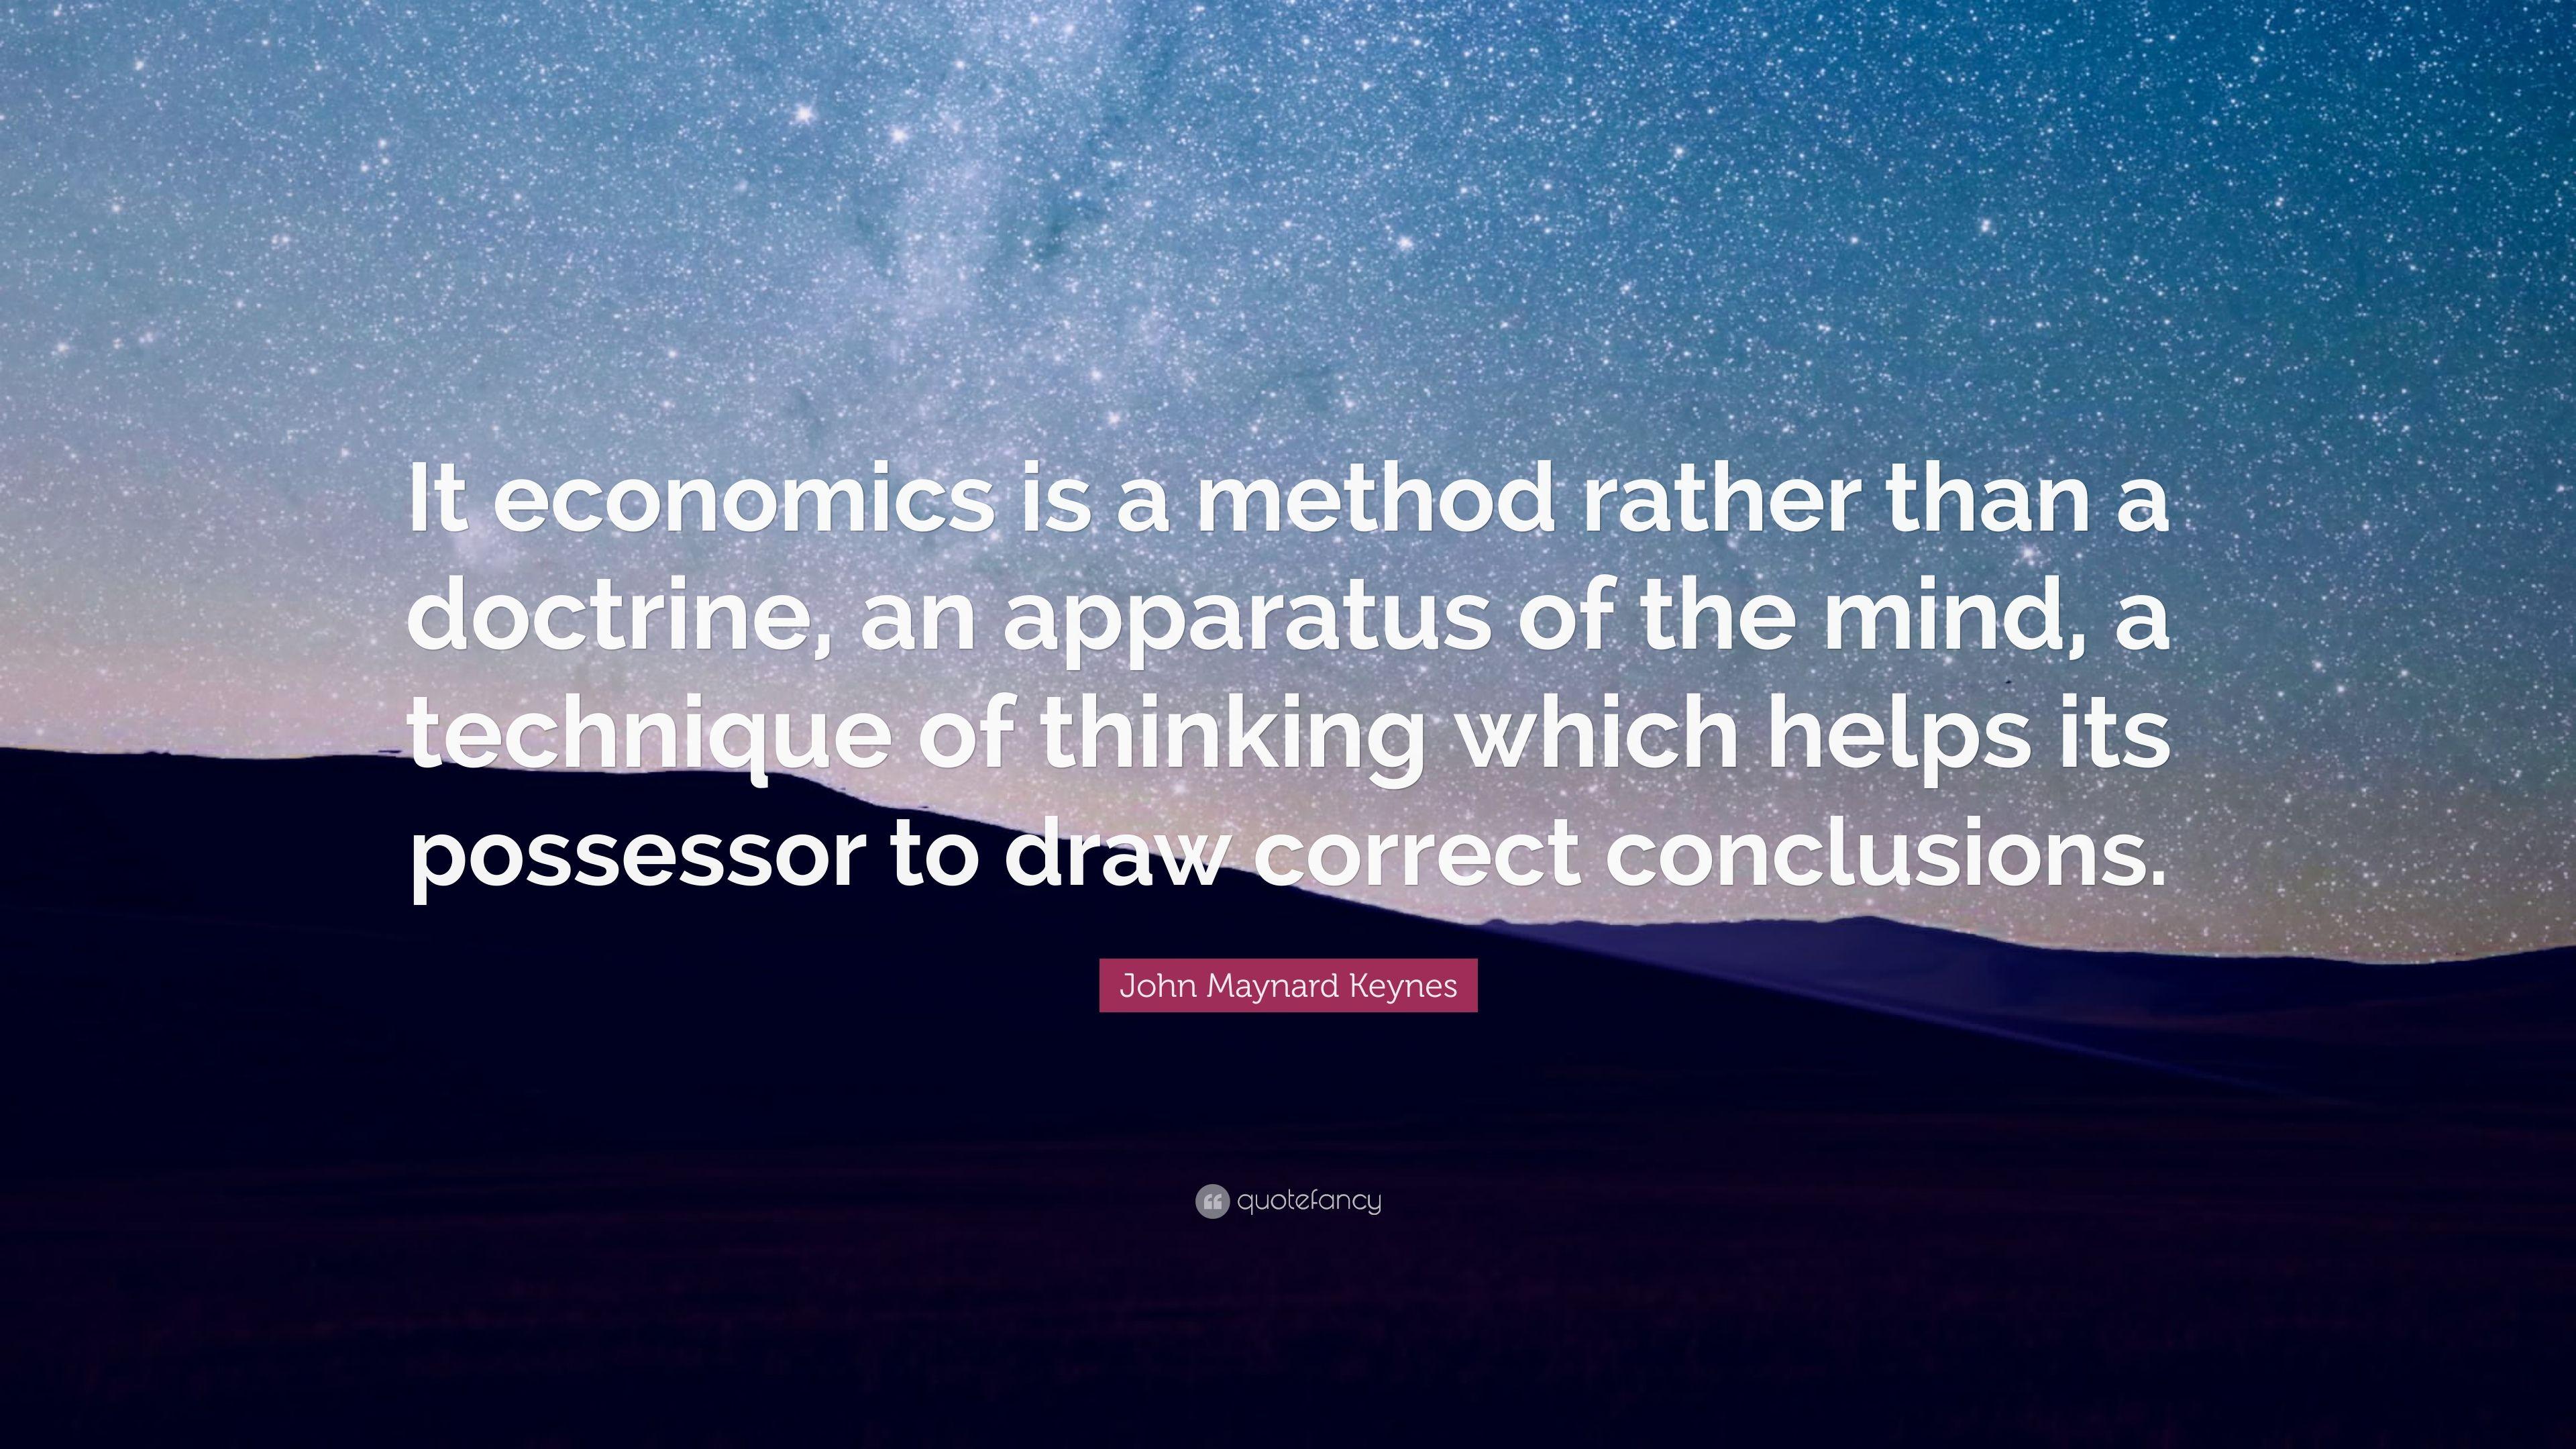 John Maynard Keynes Quote: “It economics is a method rather than a